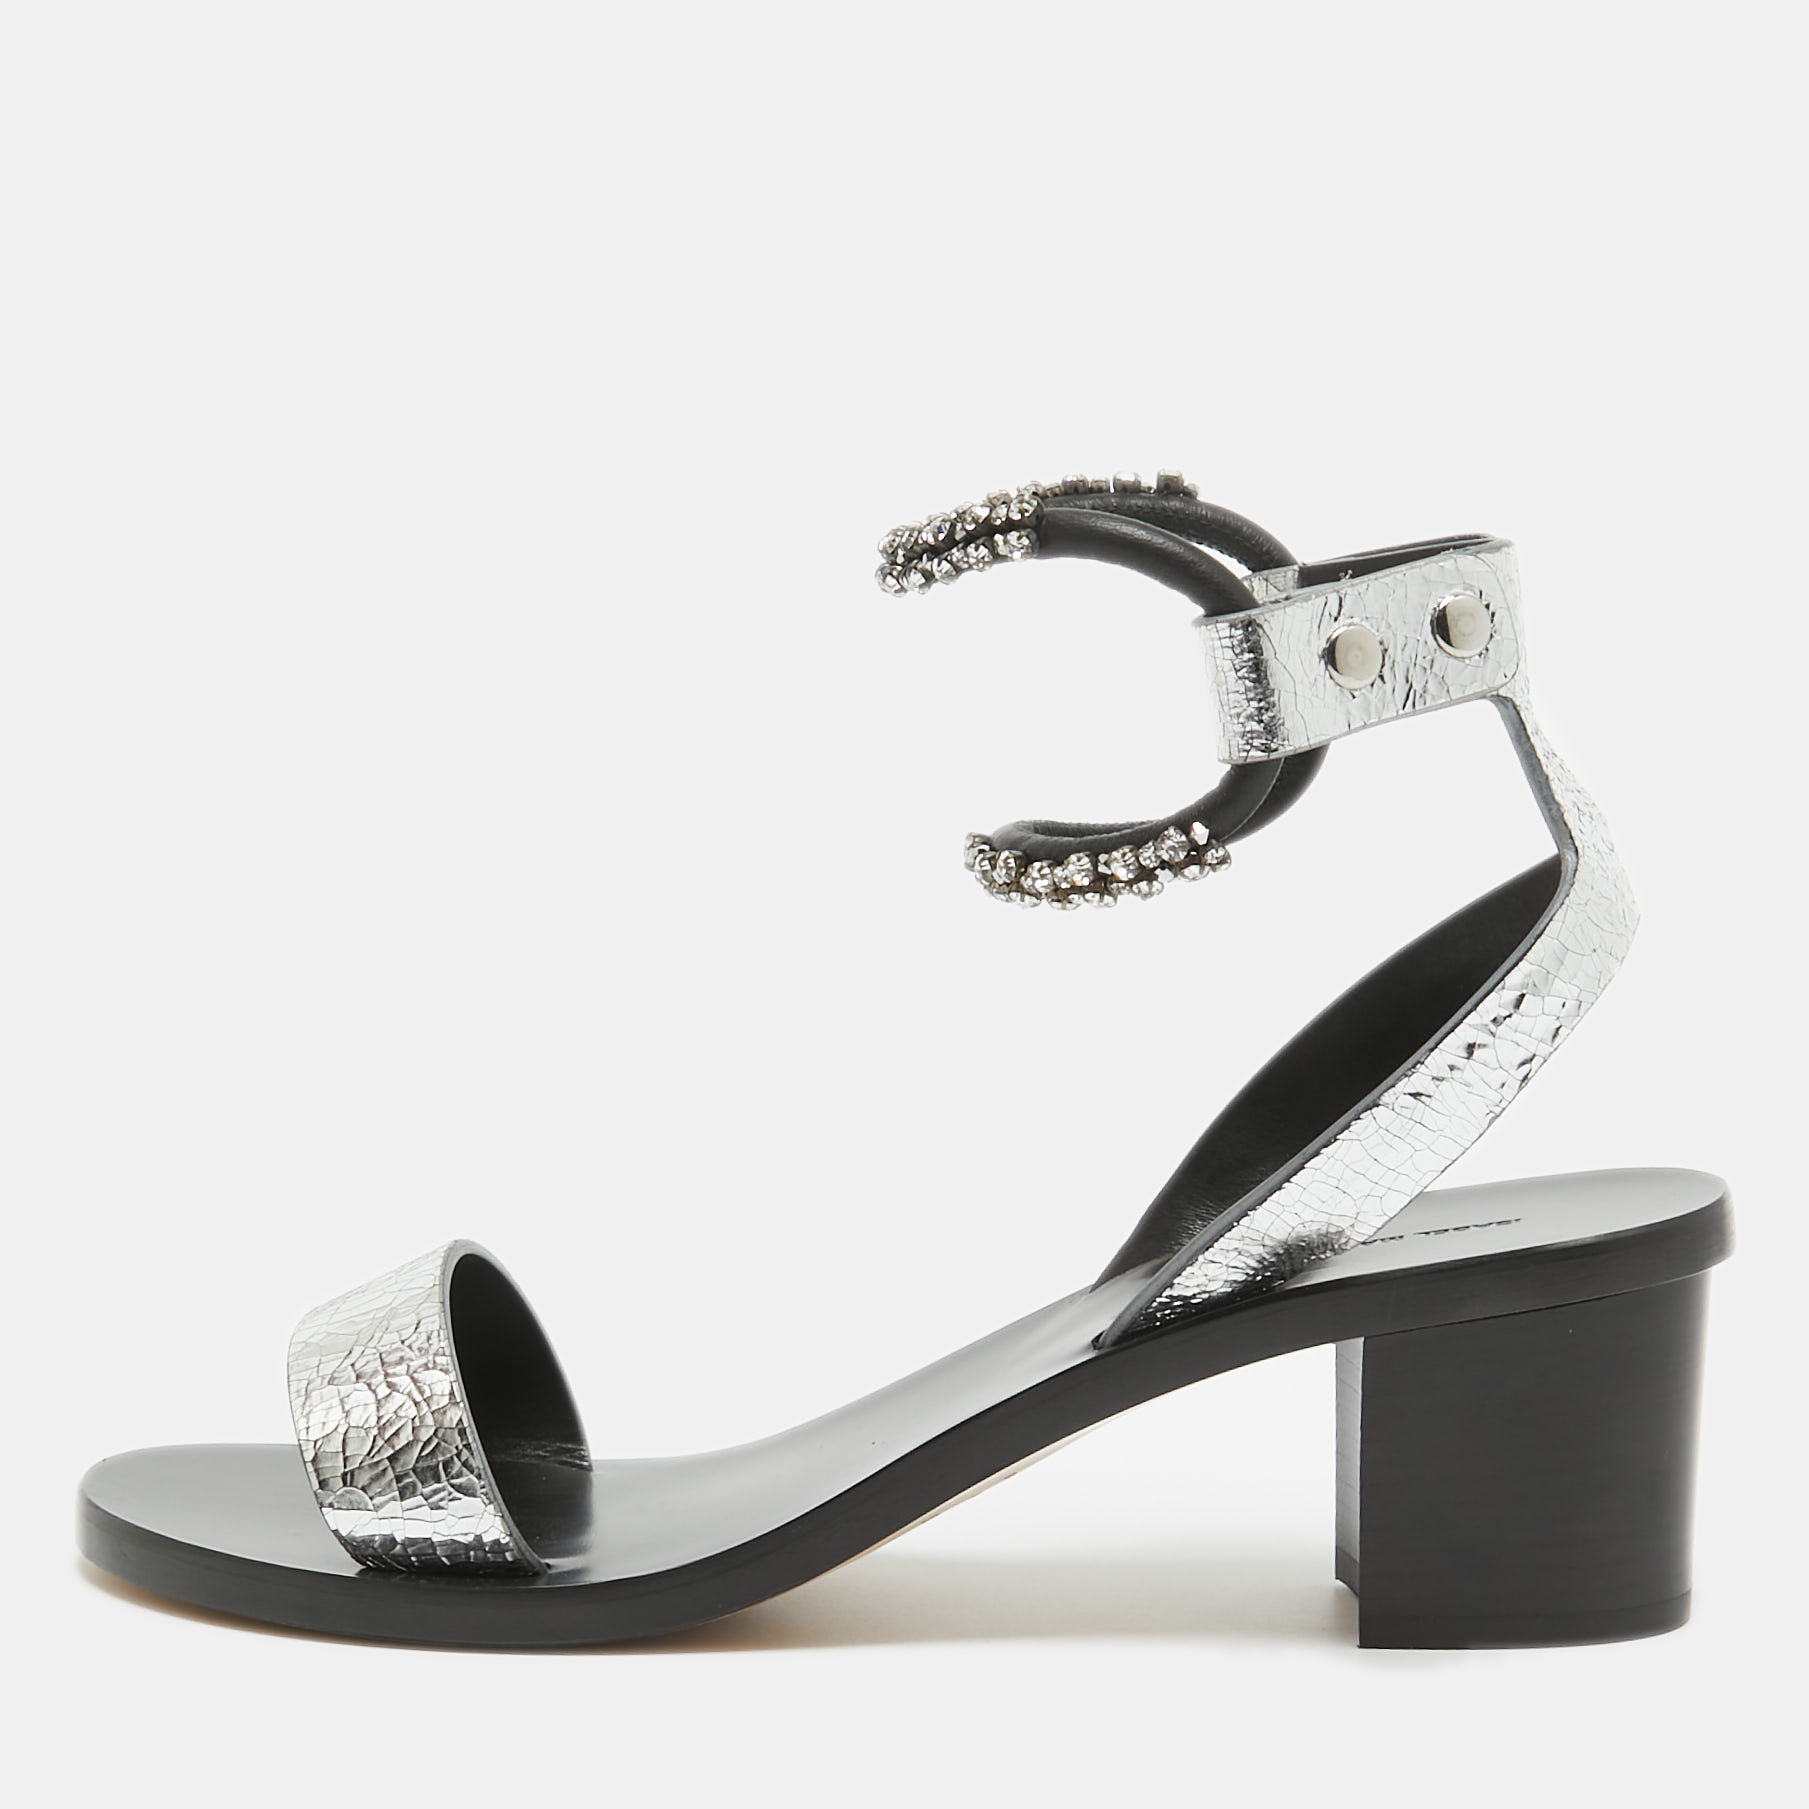 Pre-owned Isabel Marant Silver/black Crackled Laminated Leather Ankle Strap Sandals Size 39